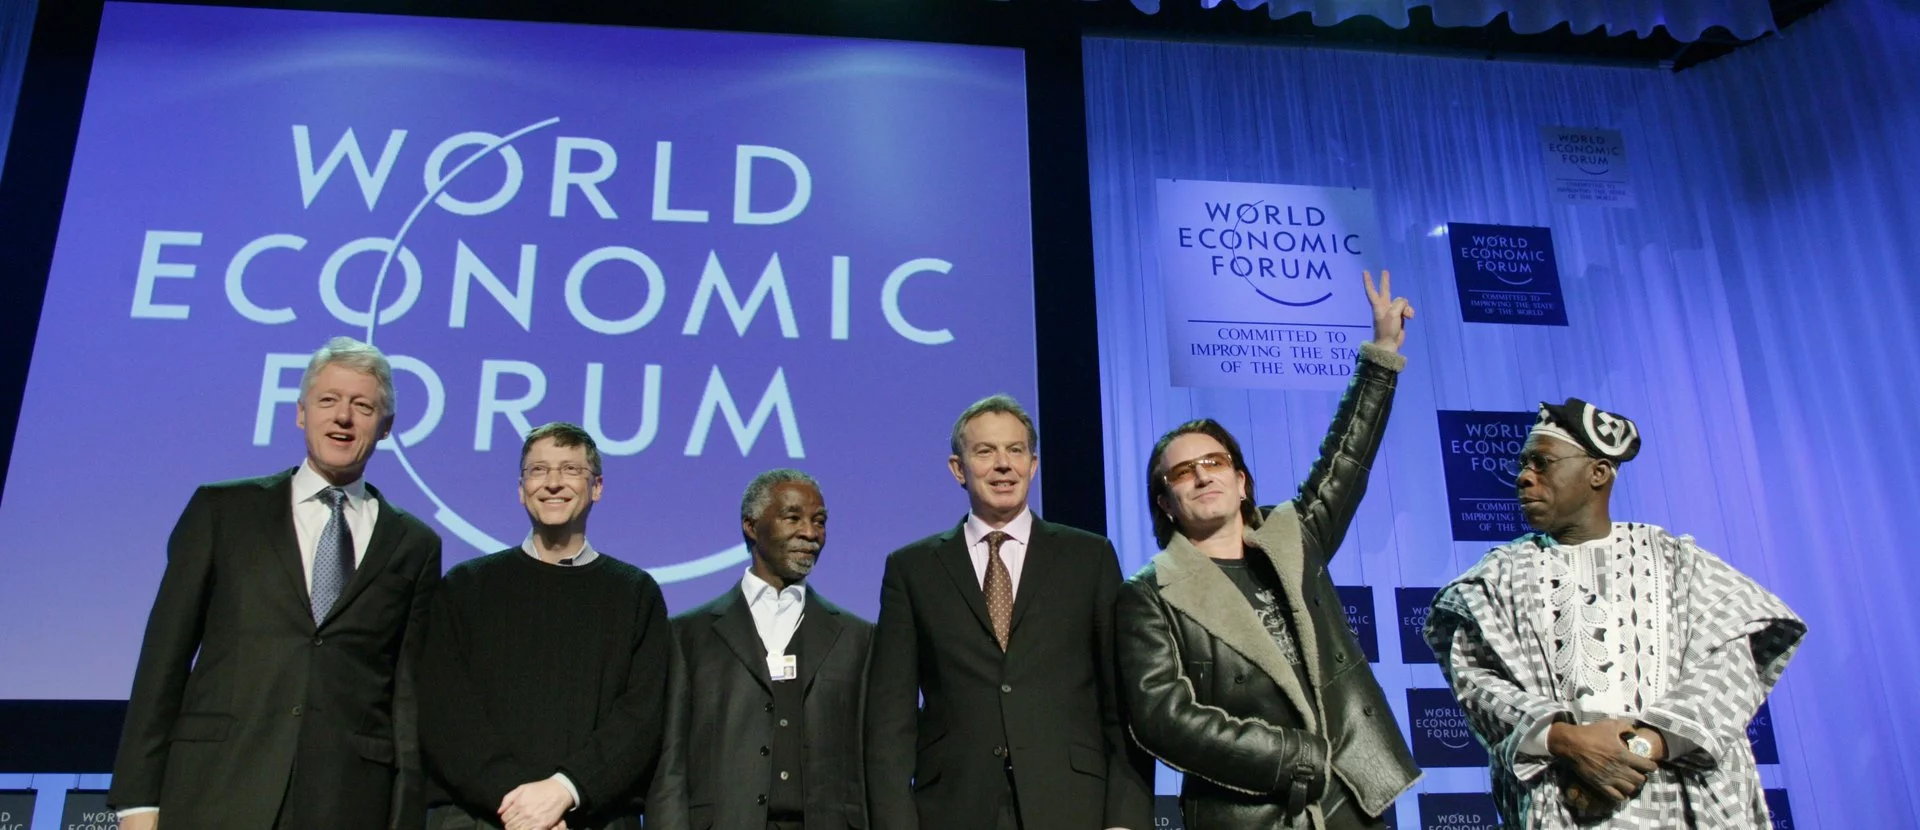 19 Facts About World Economic Forum